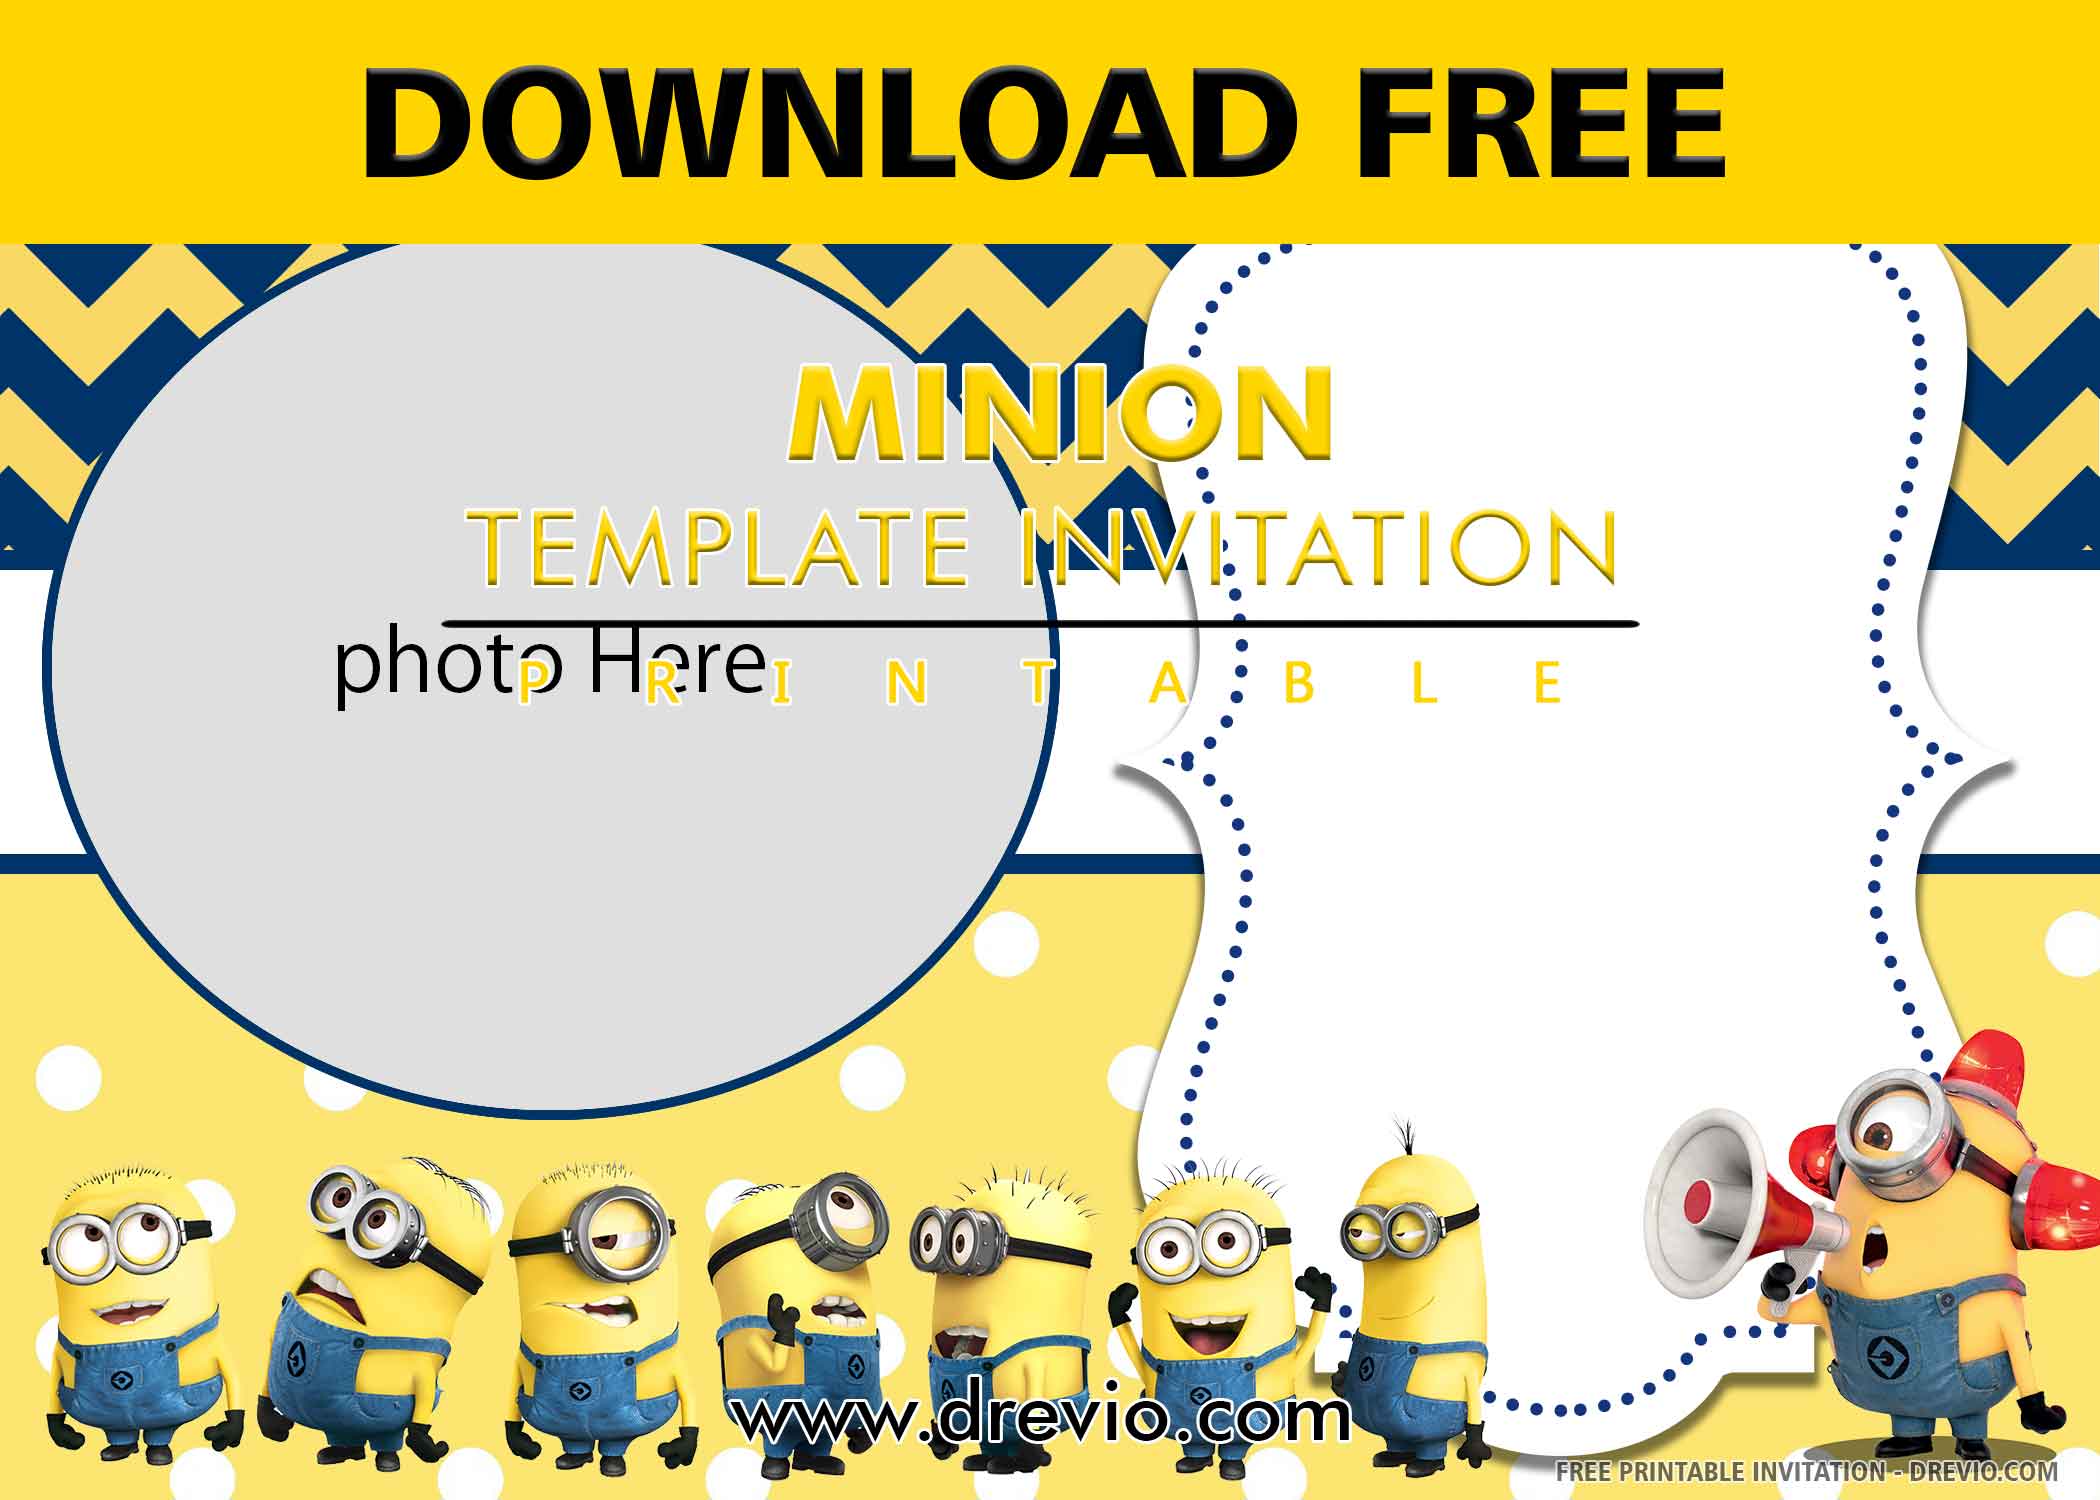 Minion invitation card watermark Download Hundreds FREE PRINTABLE 